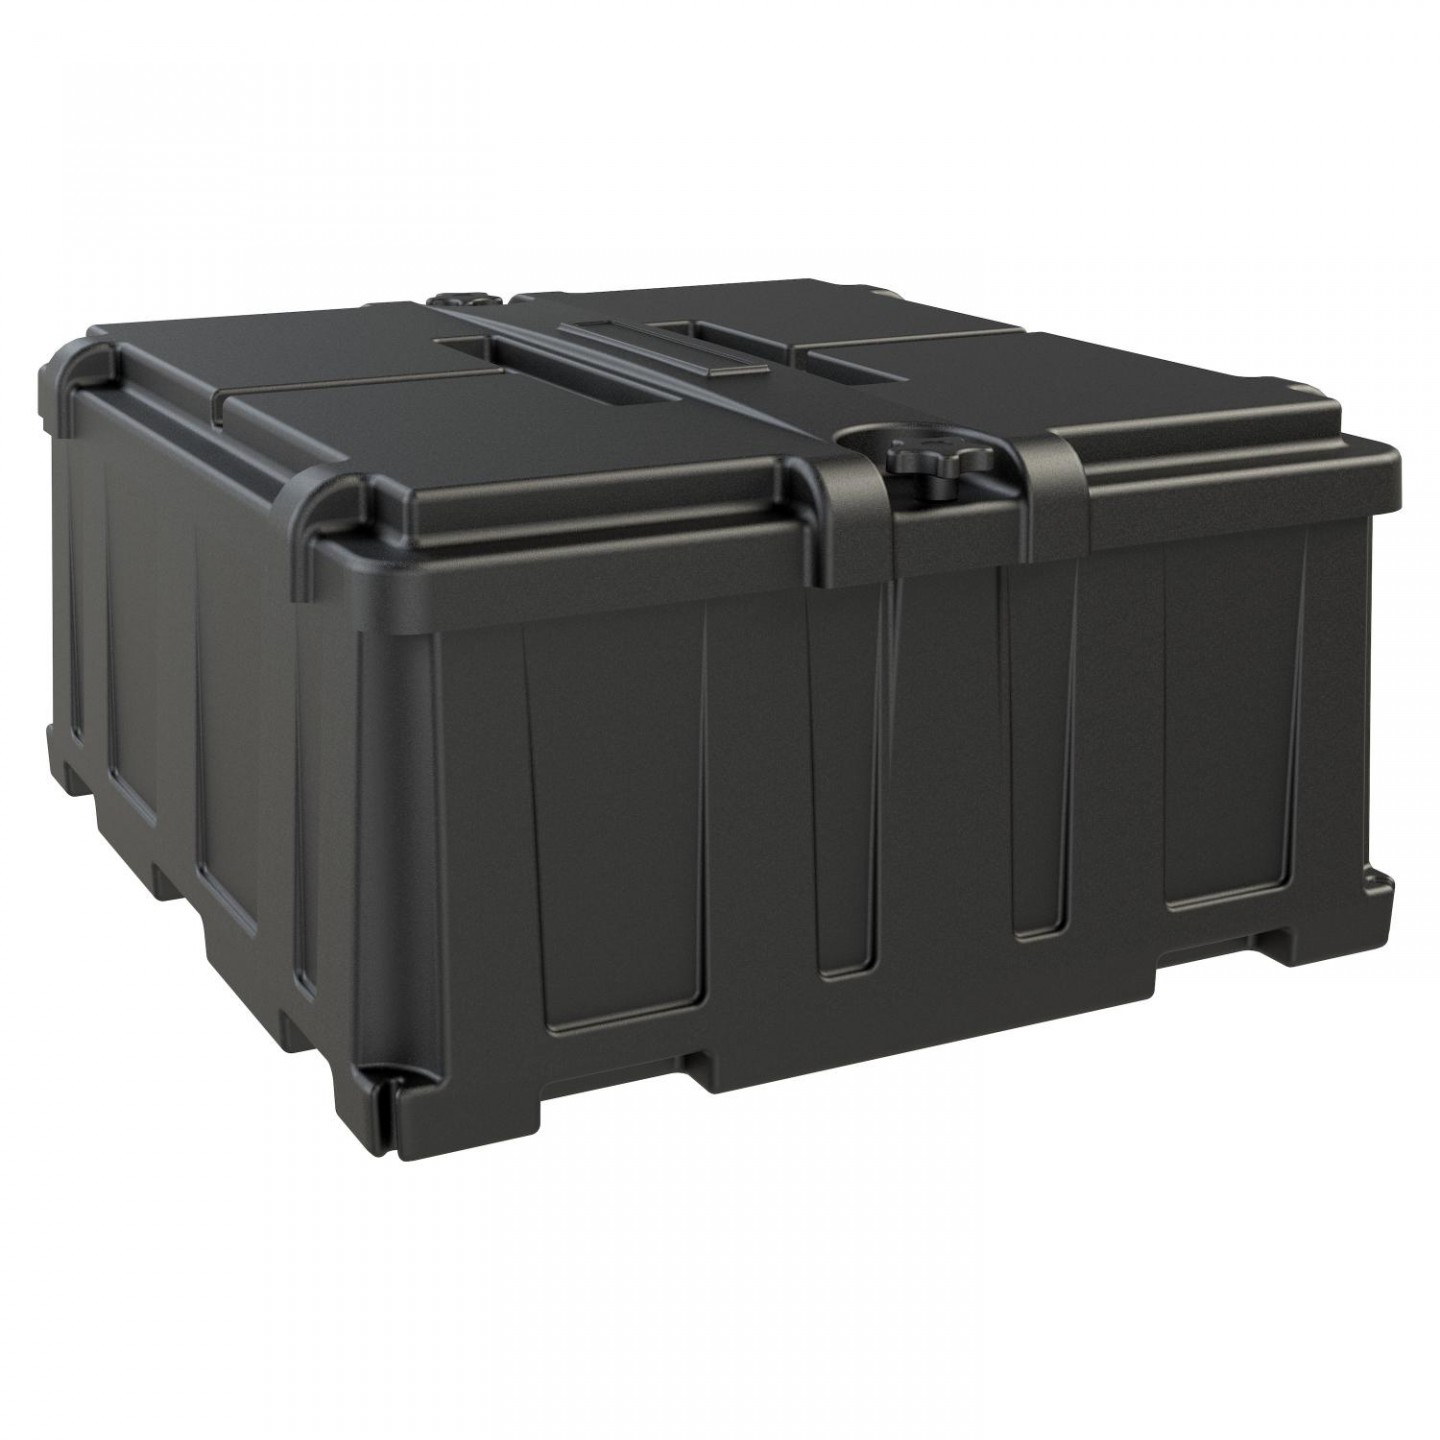 https://no.co/media/catalog/product/cache/1/image/1440x/040ec09b1e35df139433887a97daa66f/H/M/HM485-Dual-8D-Marine-RV-Battery-Box-Storage-Main.jpg